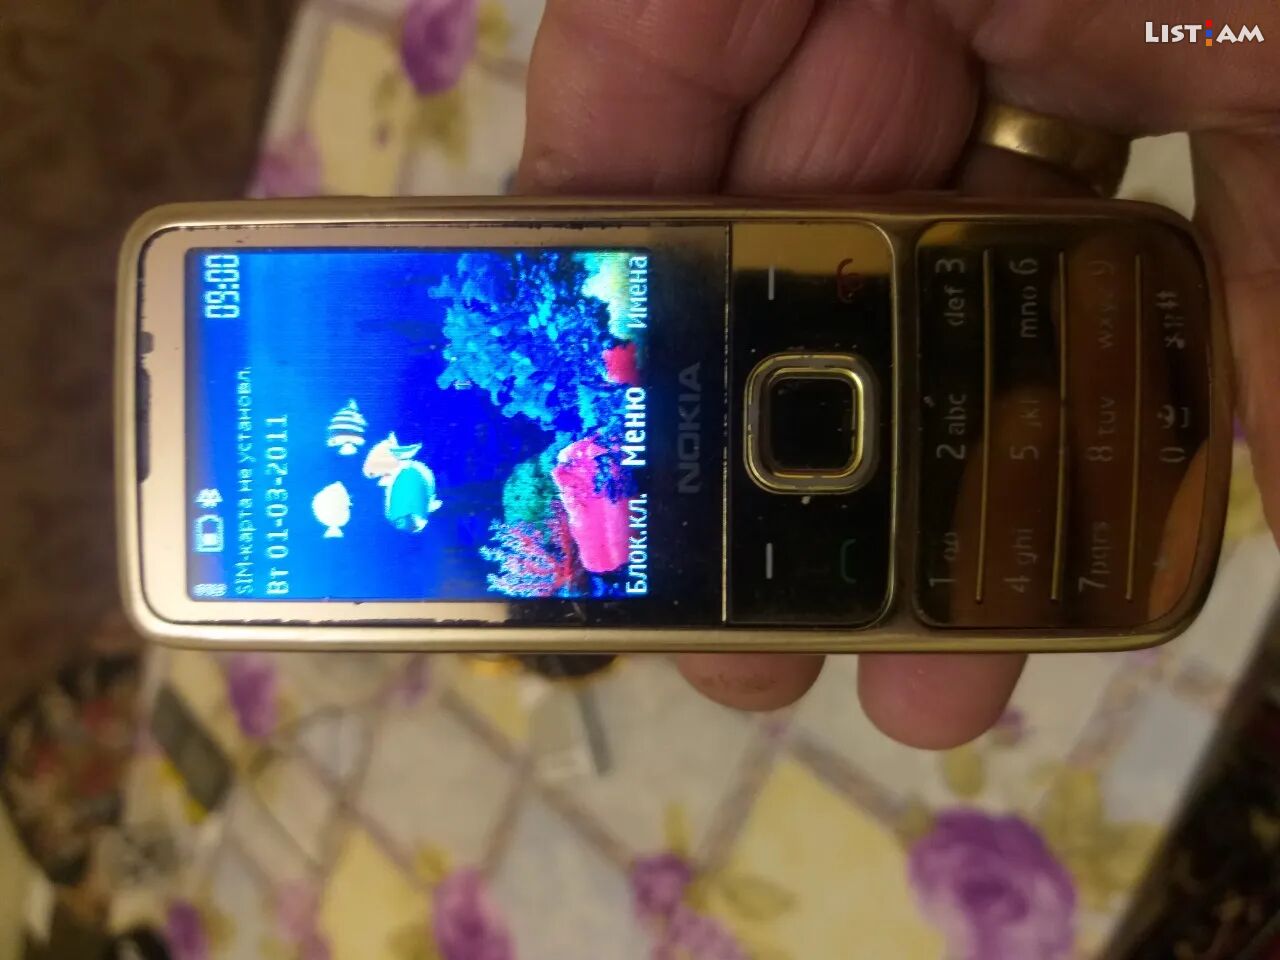 Nokia 6700 slide, <